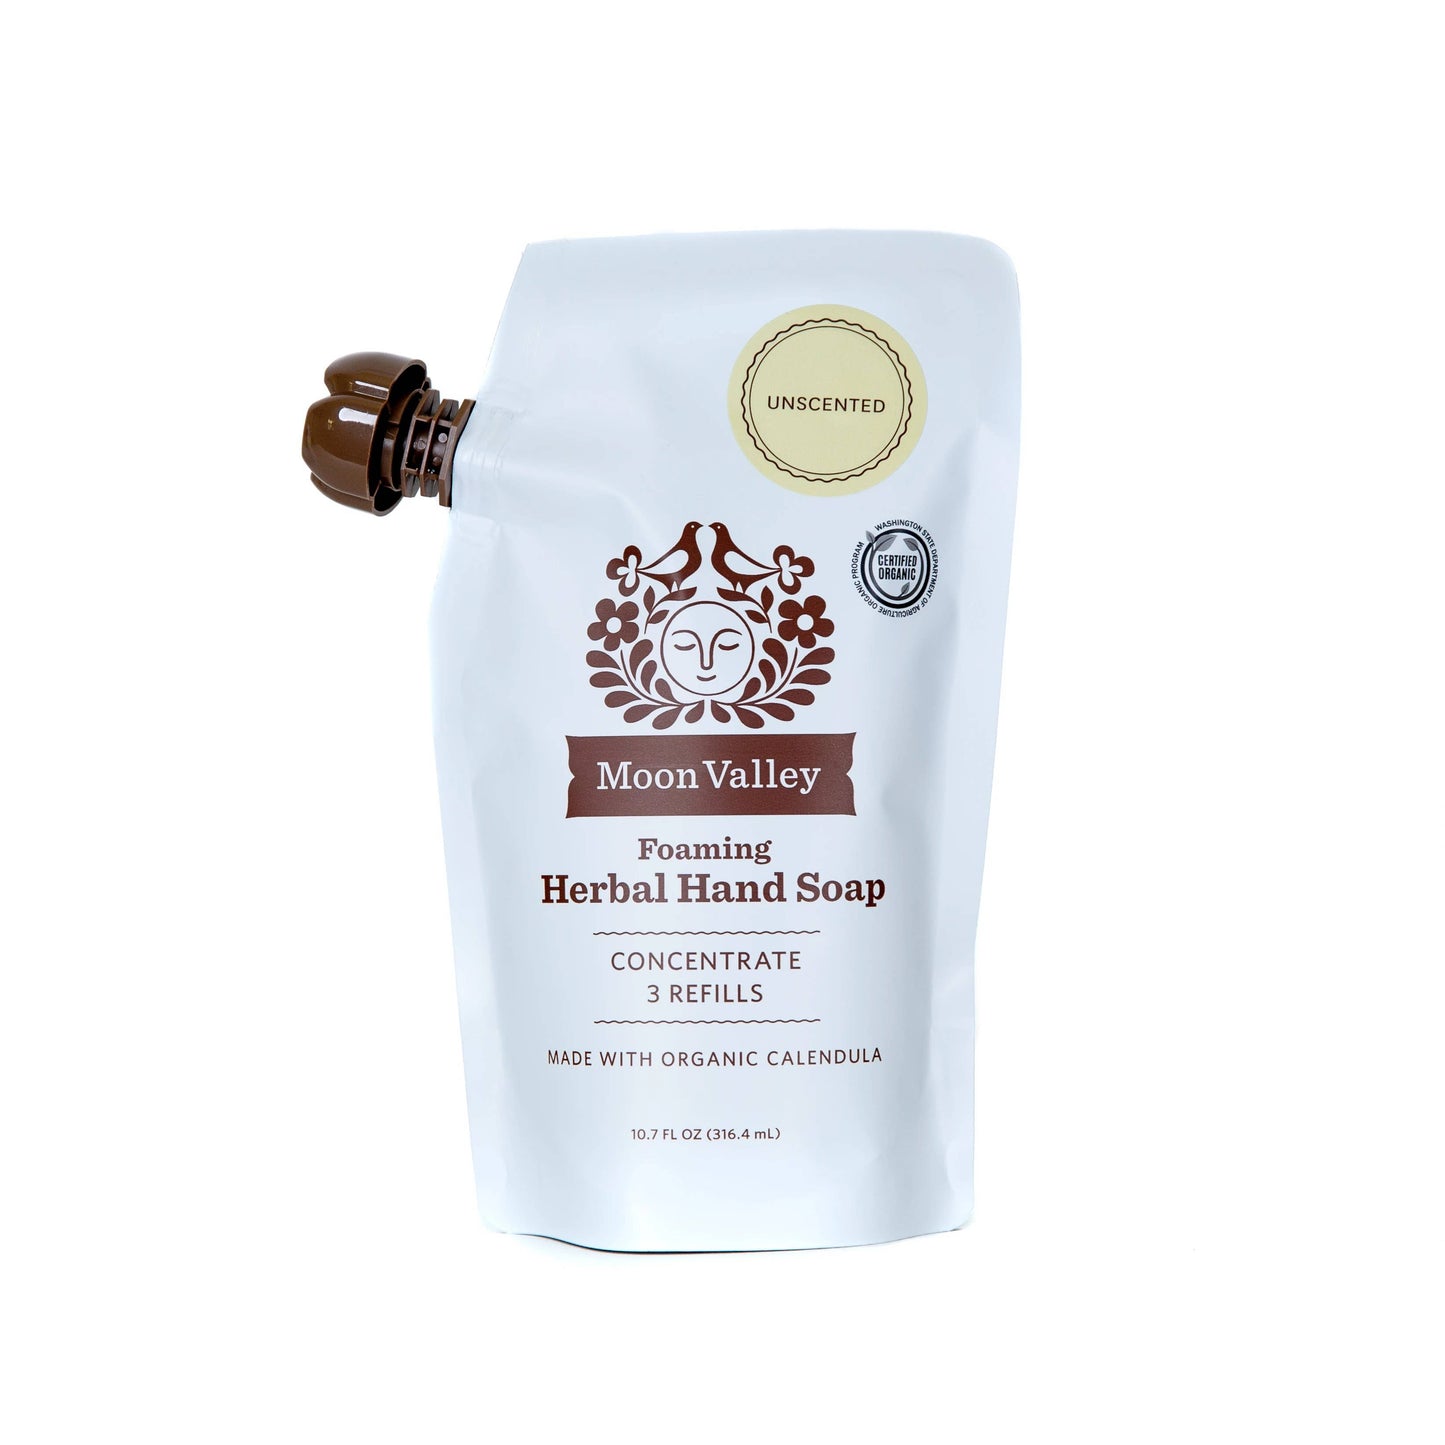 Foaming Herbal Hand Soap Refill